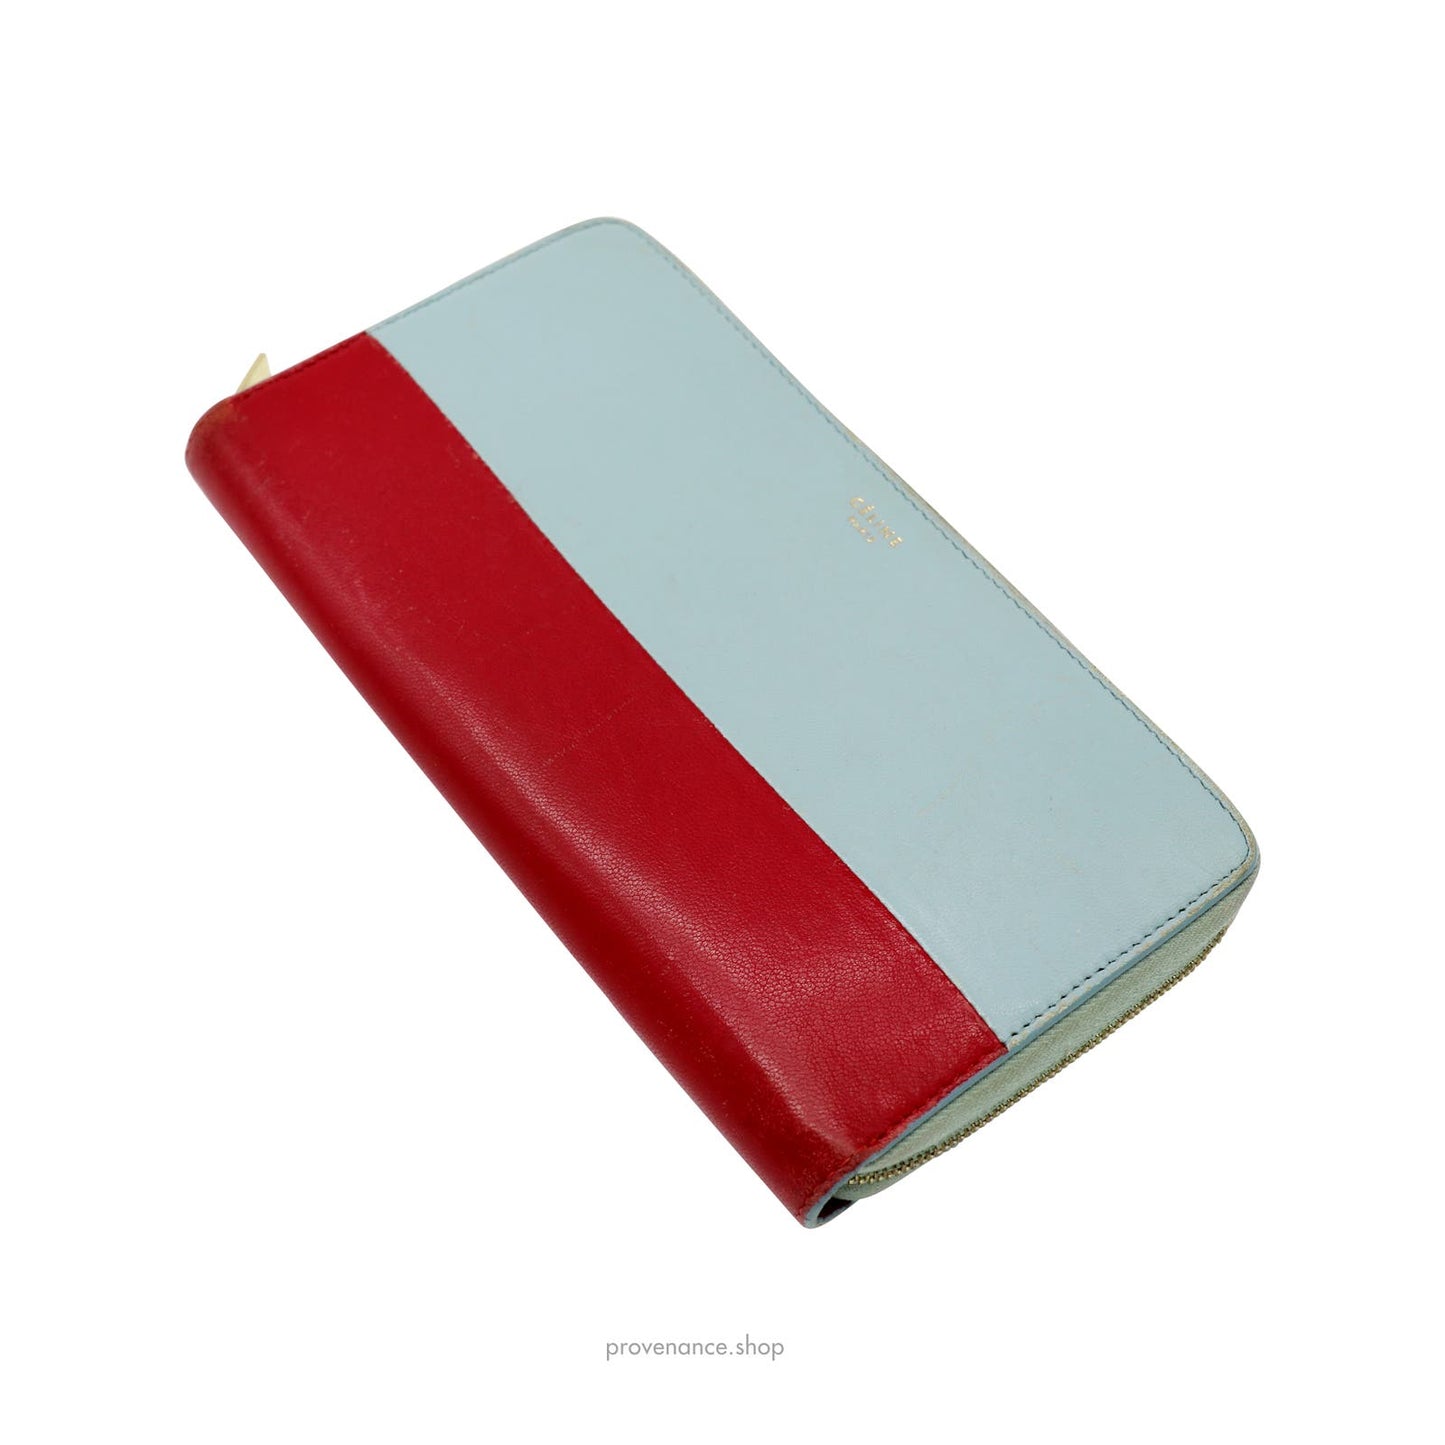 🔴 Celine Multifunction Zip Wallet - Sky Blue/Red